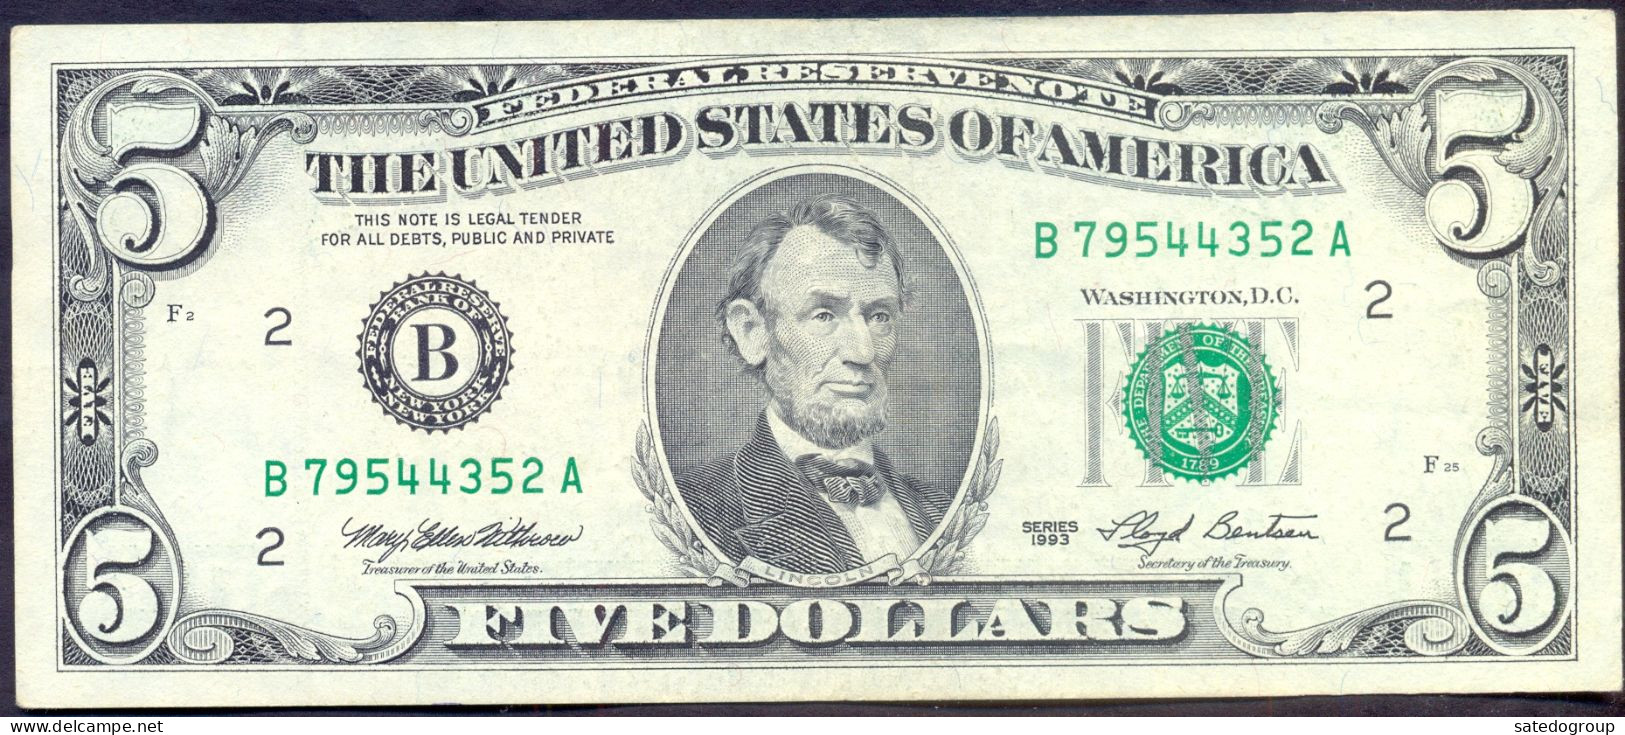 USA 5 Dollars 1993 B  - VF+ # P- 491 < B - New York NY > - Billetes De La Reserva Federal (1928-...)